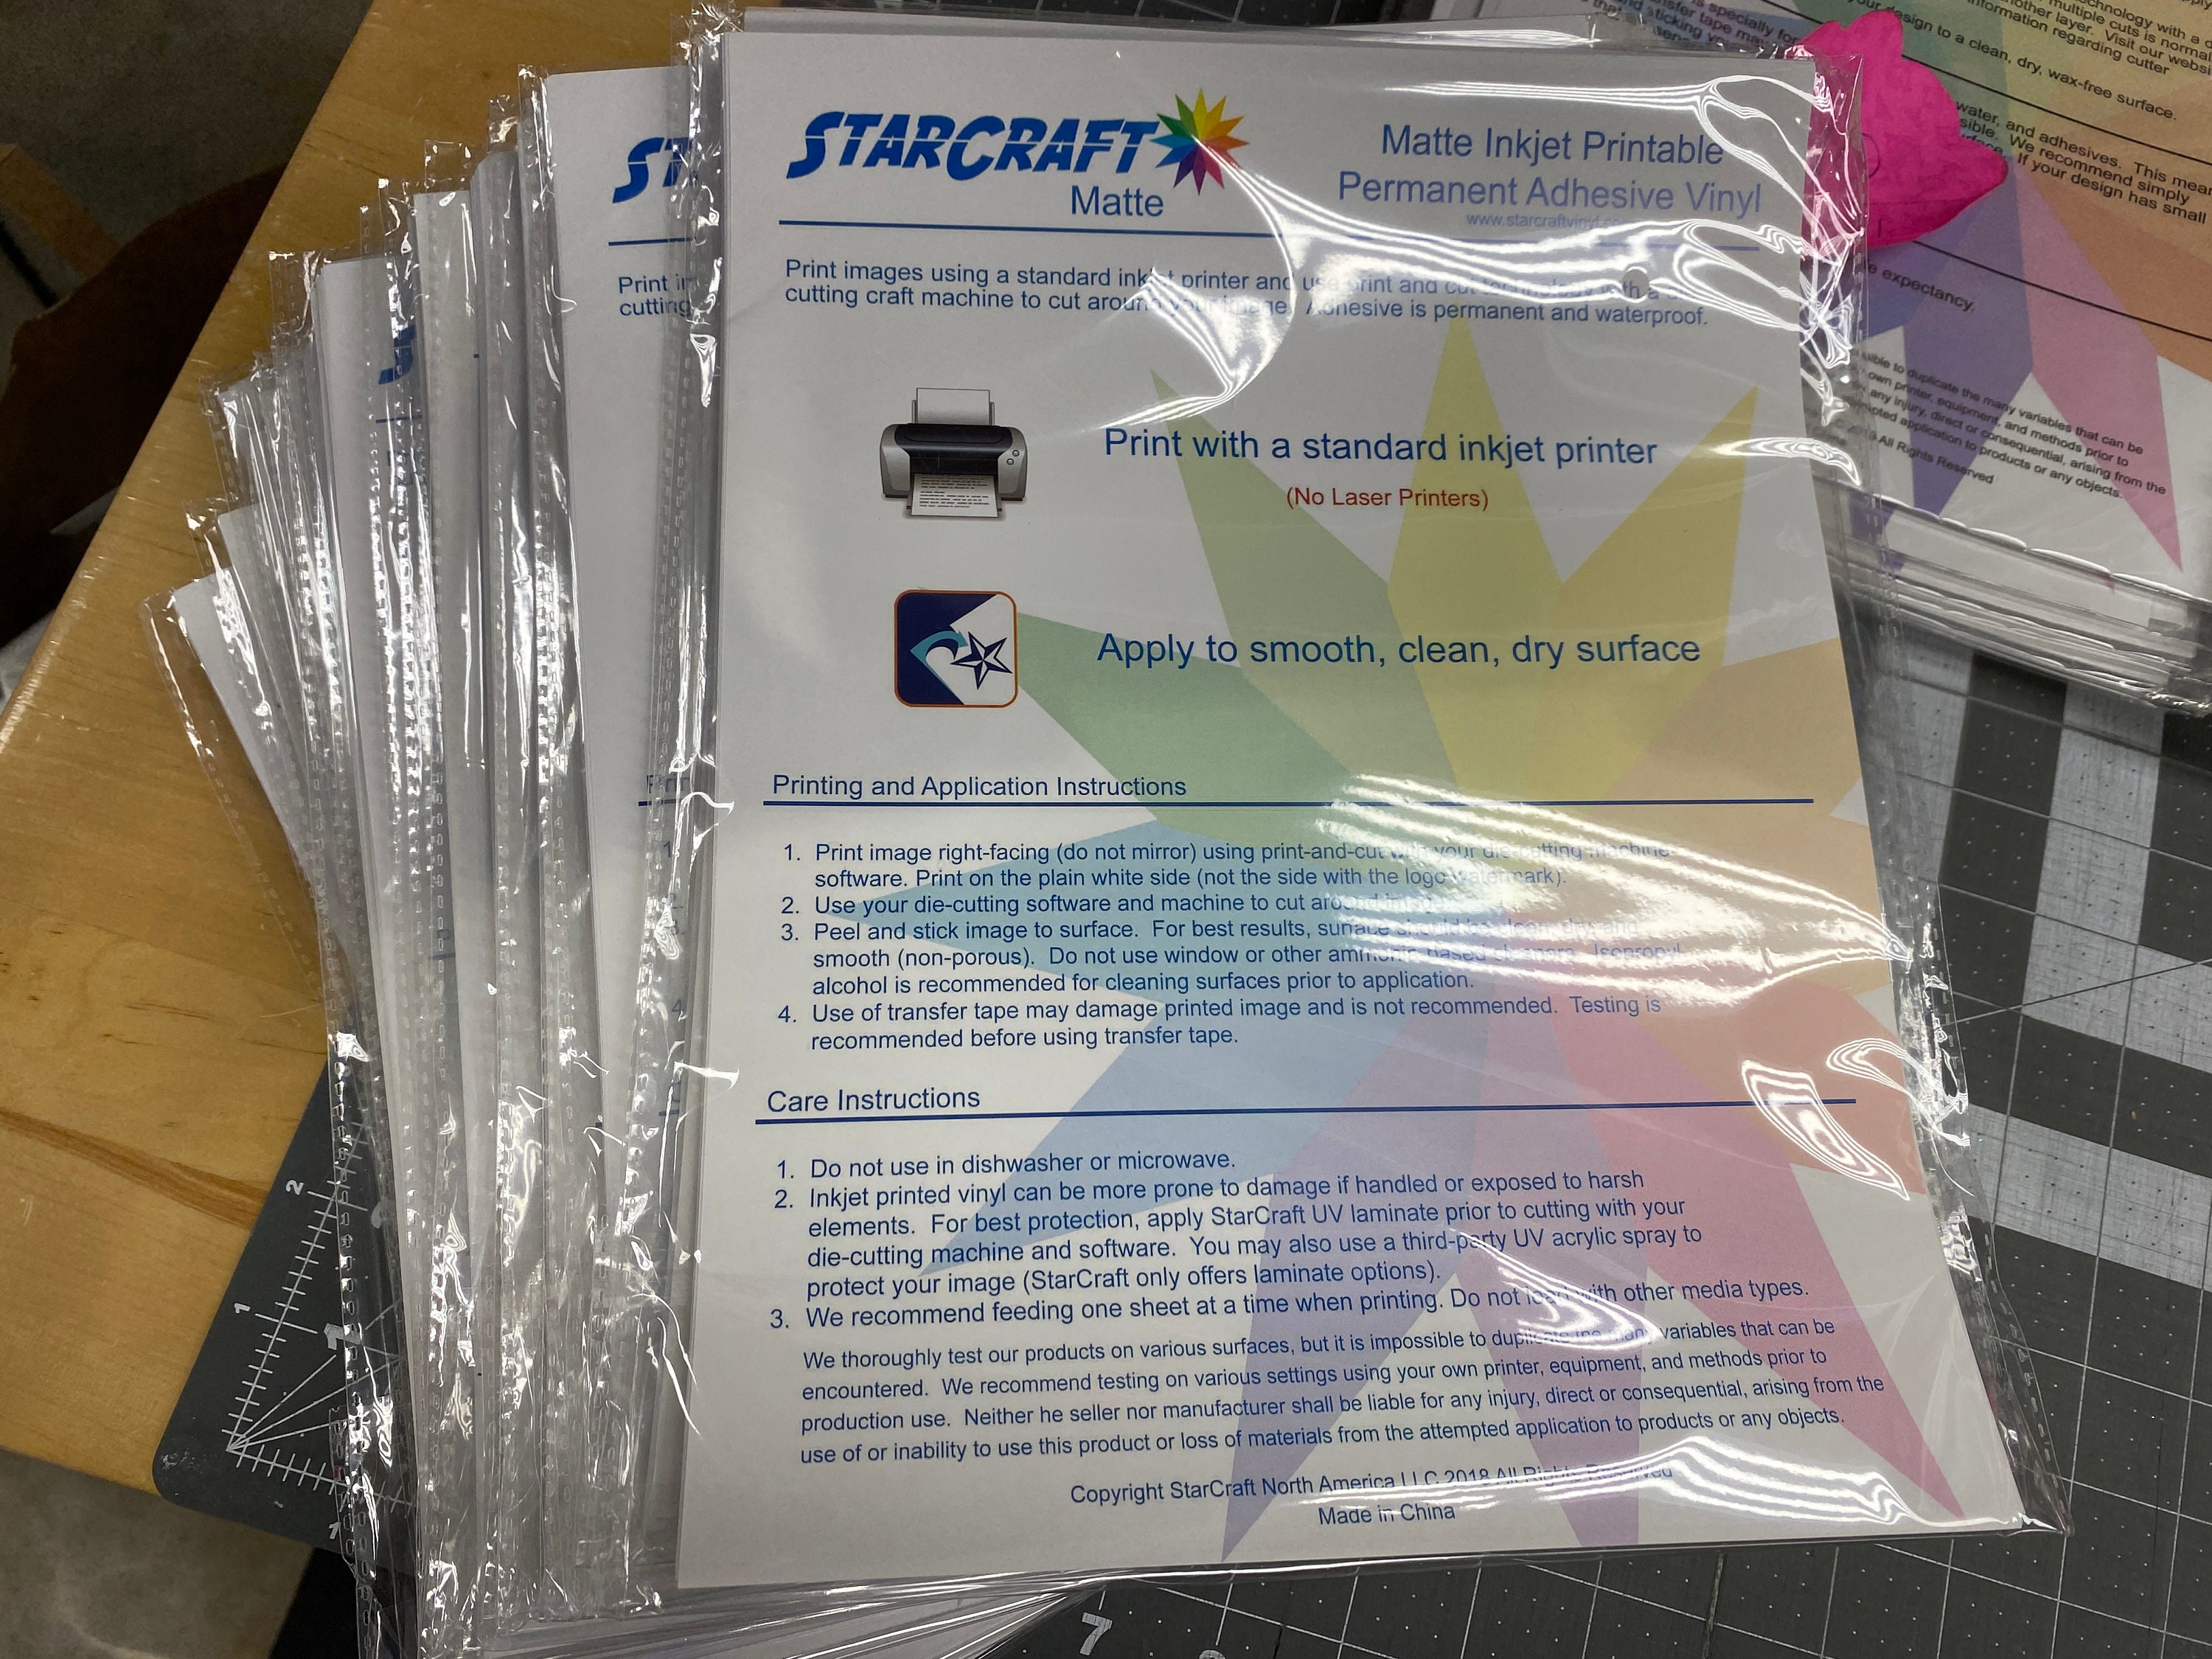 StarCraft Inkjet Printable for Matte Permanent Adhesive Vinyl